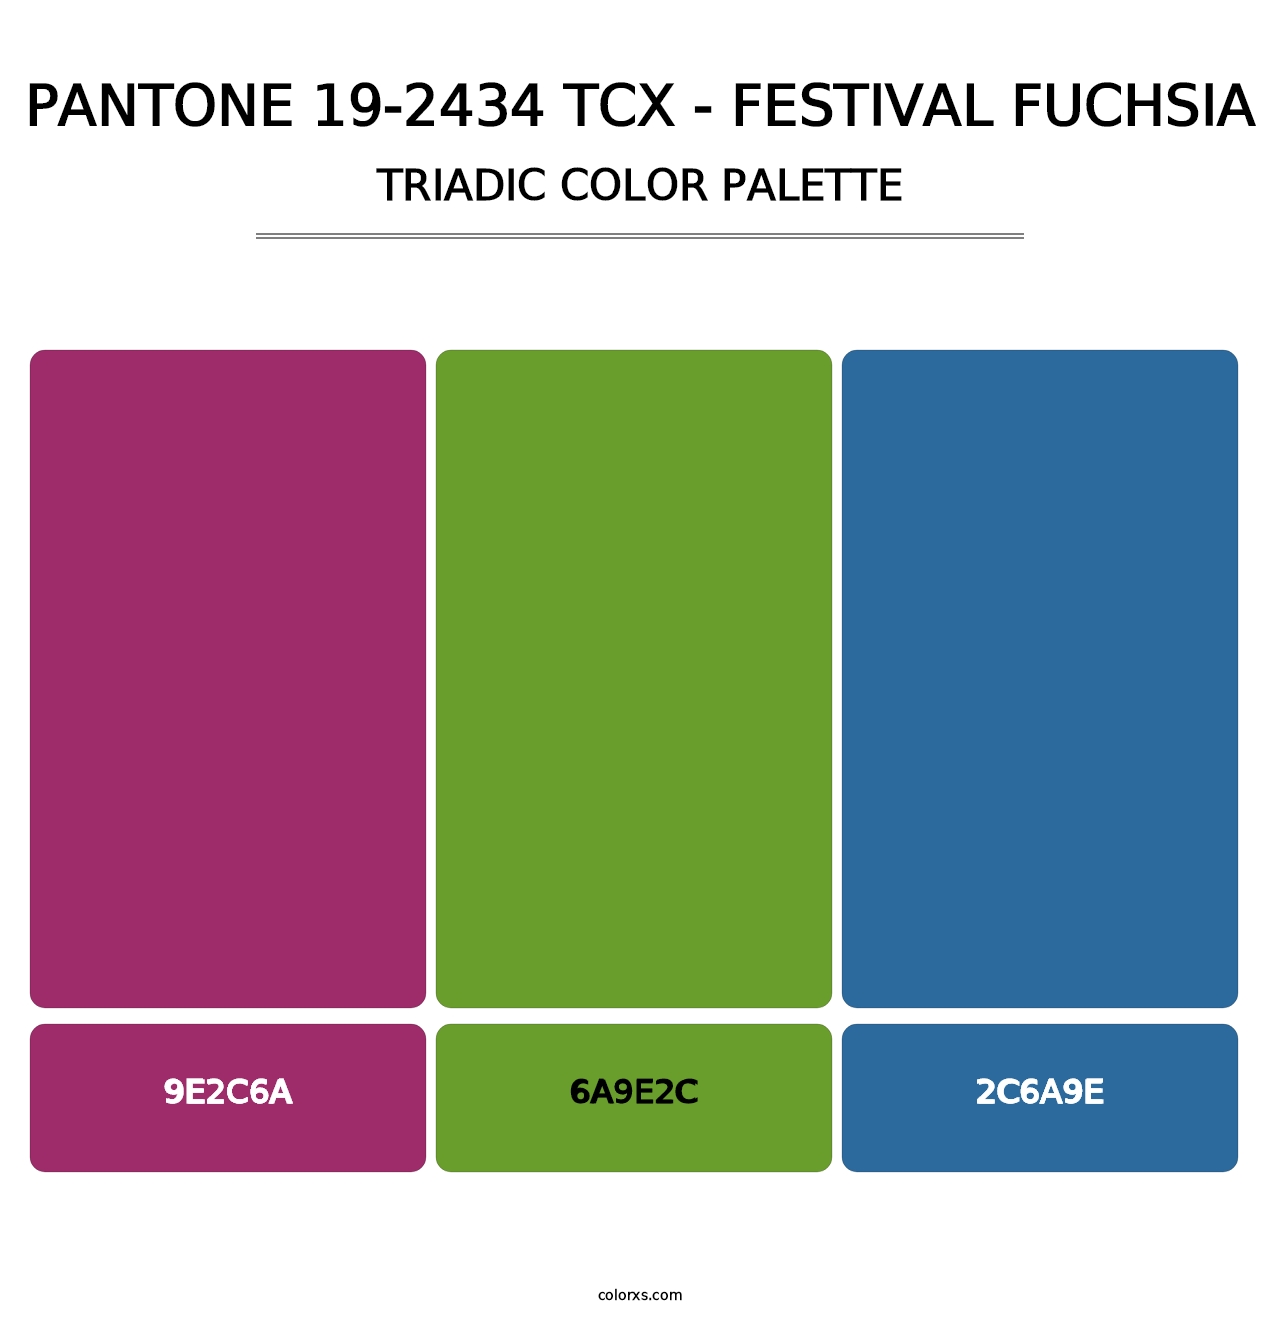 PANTONE 19-2434 TCX - Festival Fuchsia - Triadic Color Palette